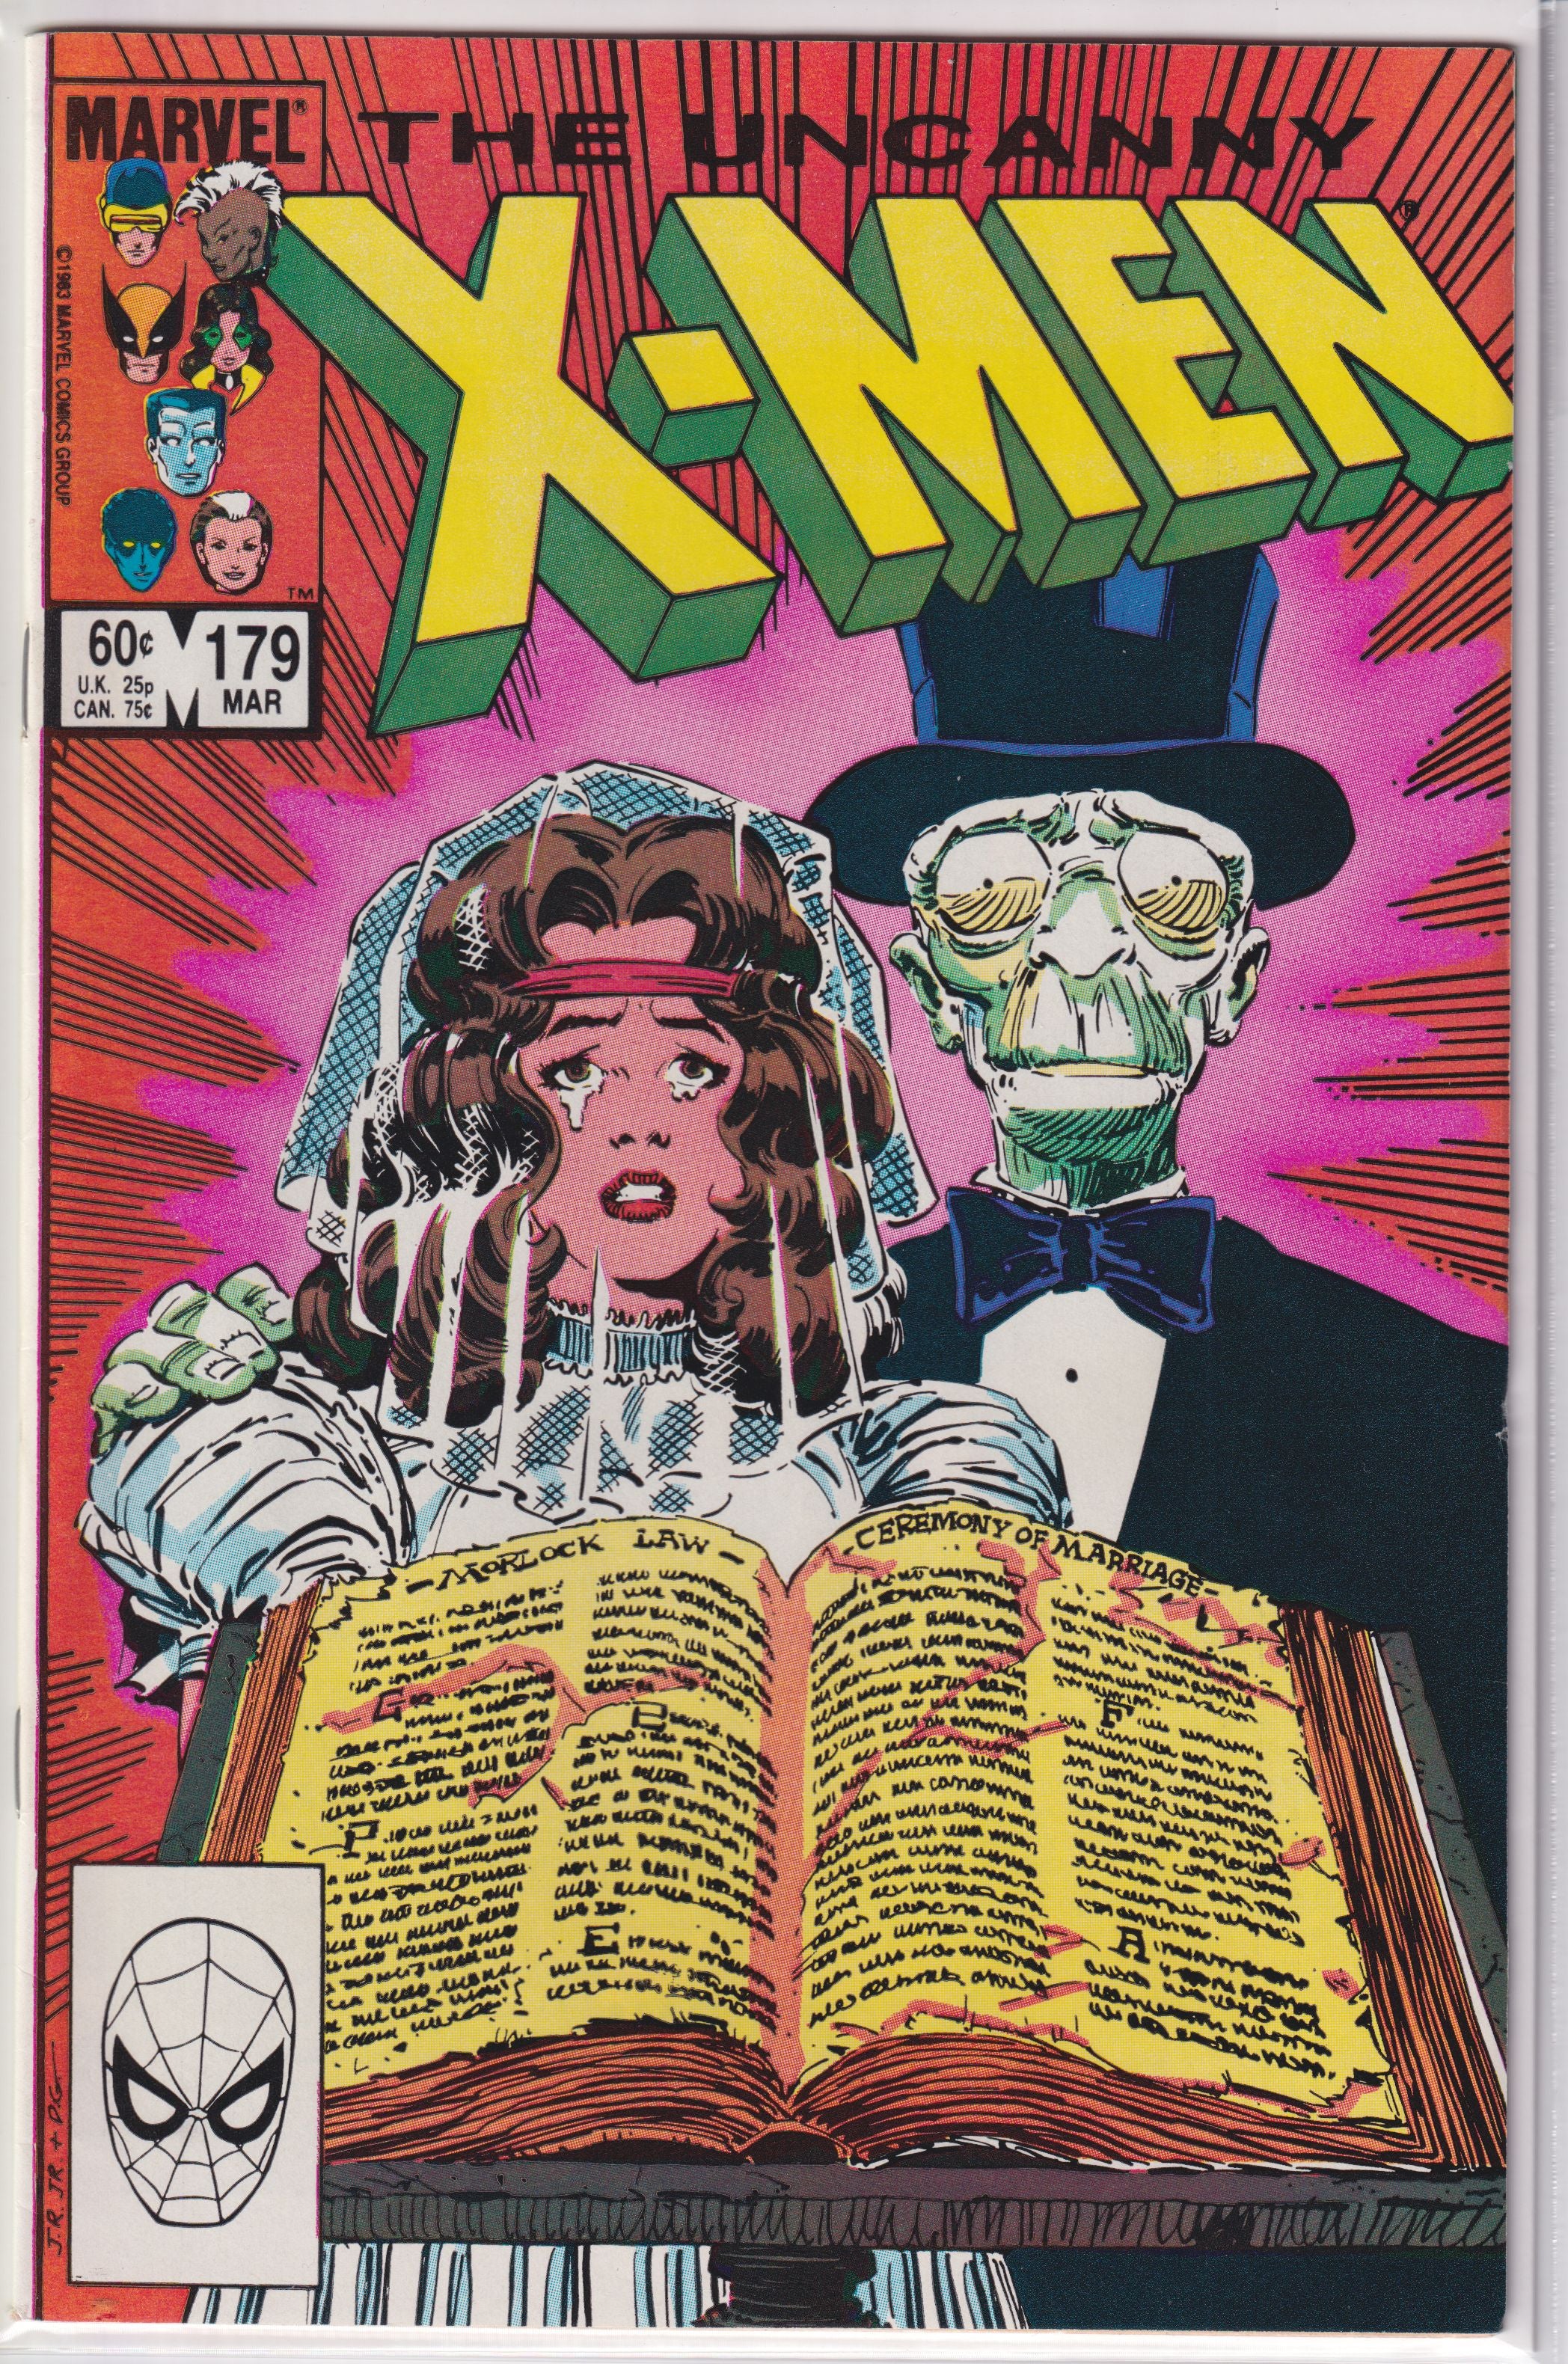 UNCANNY X-MEN (1981) #179 VF